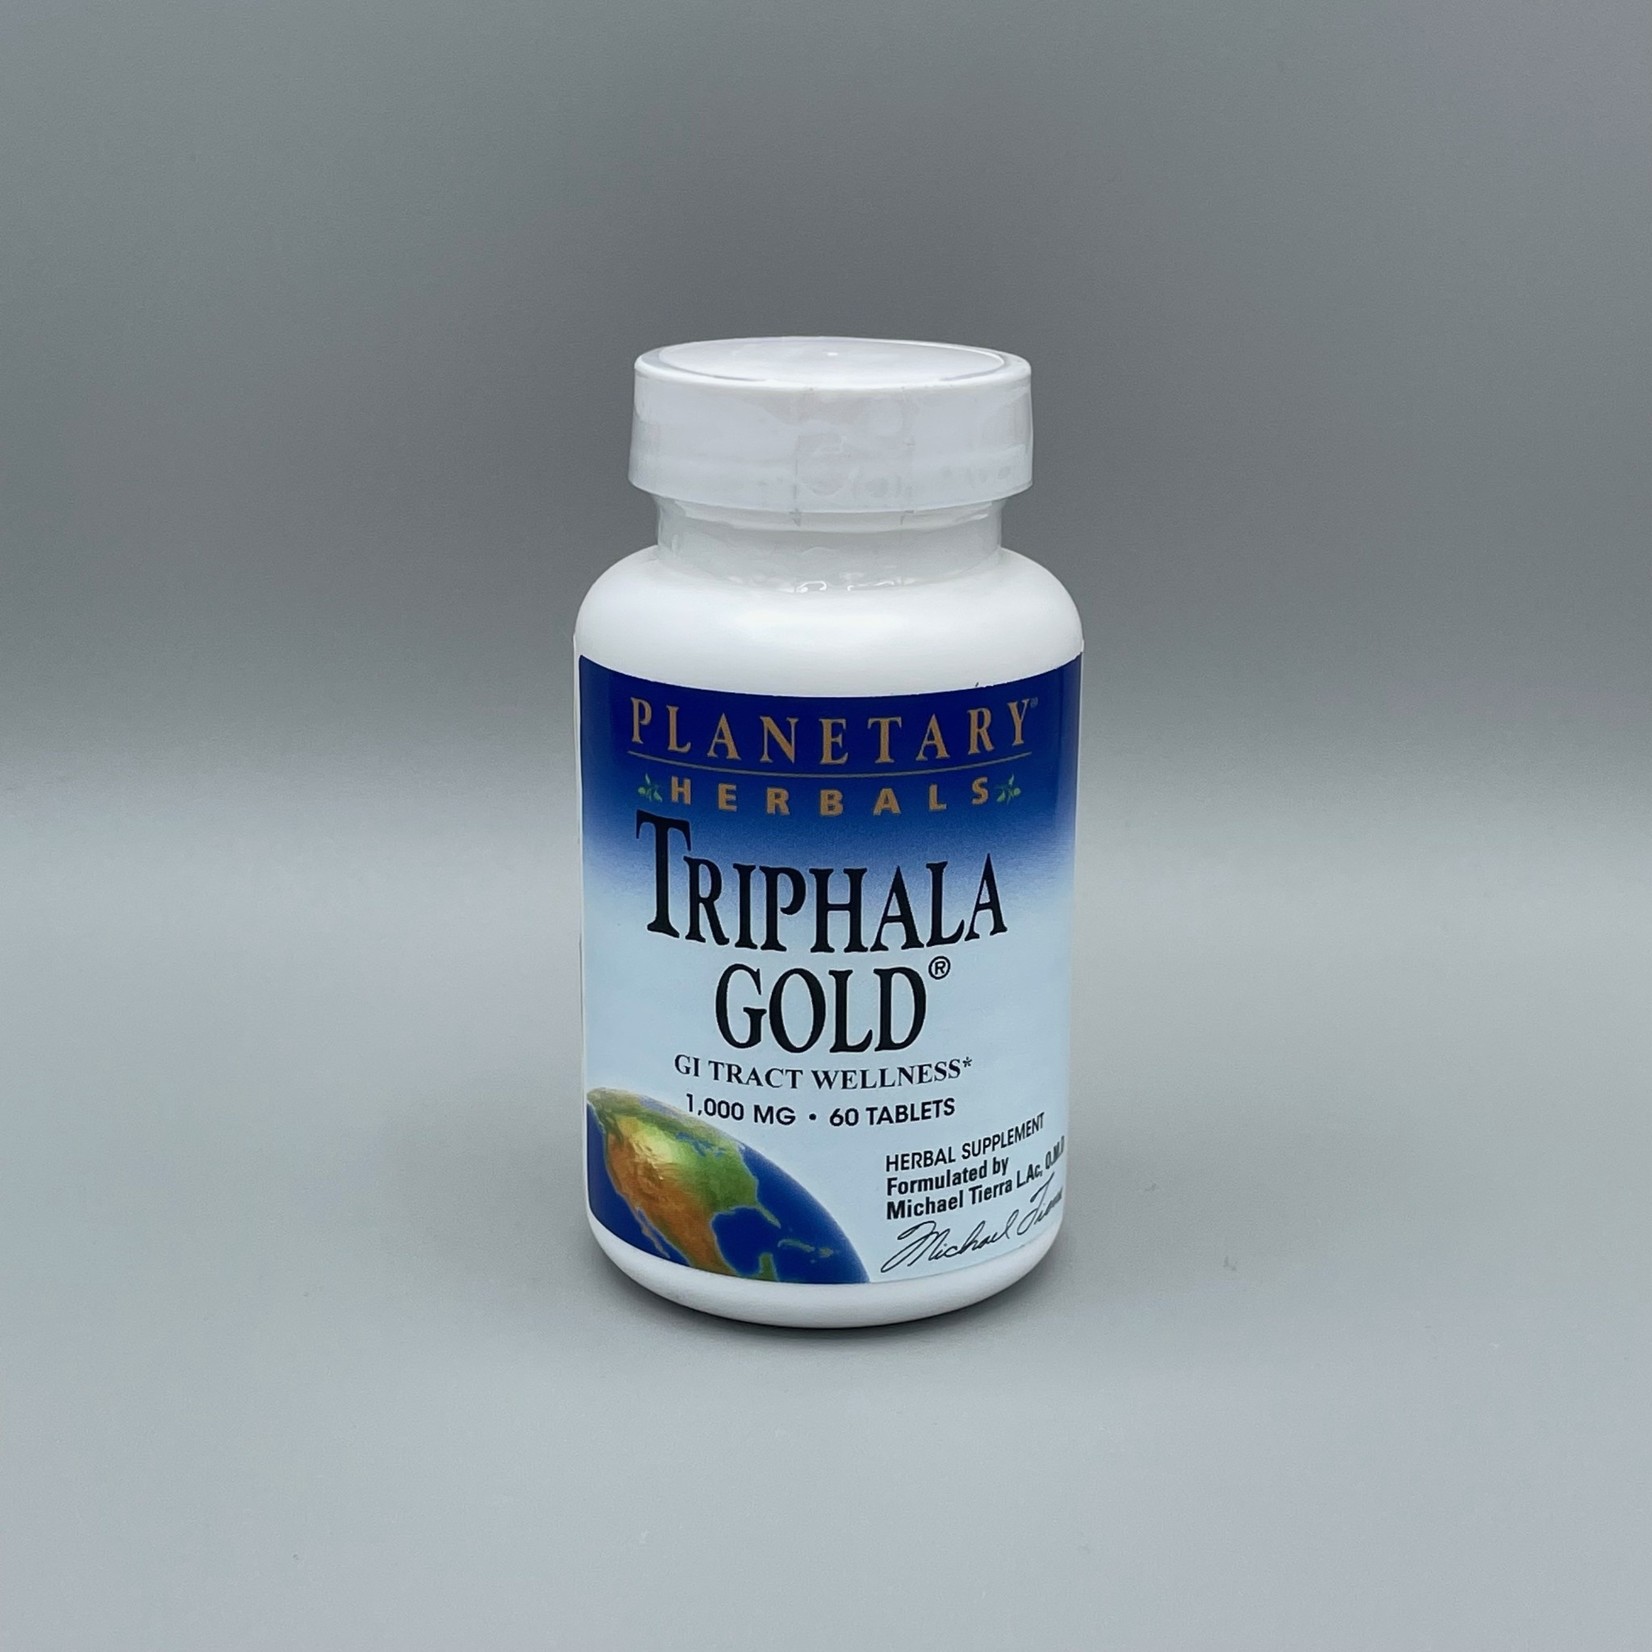 Planetary Herbals Triphala Gold (GI Tract Wellness) - 1,000 mg, 60 Tablets